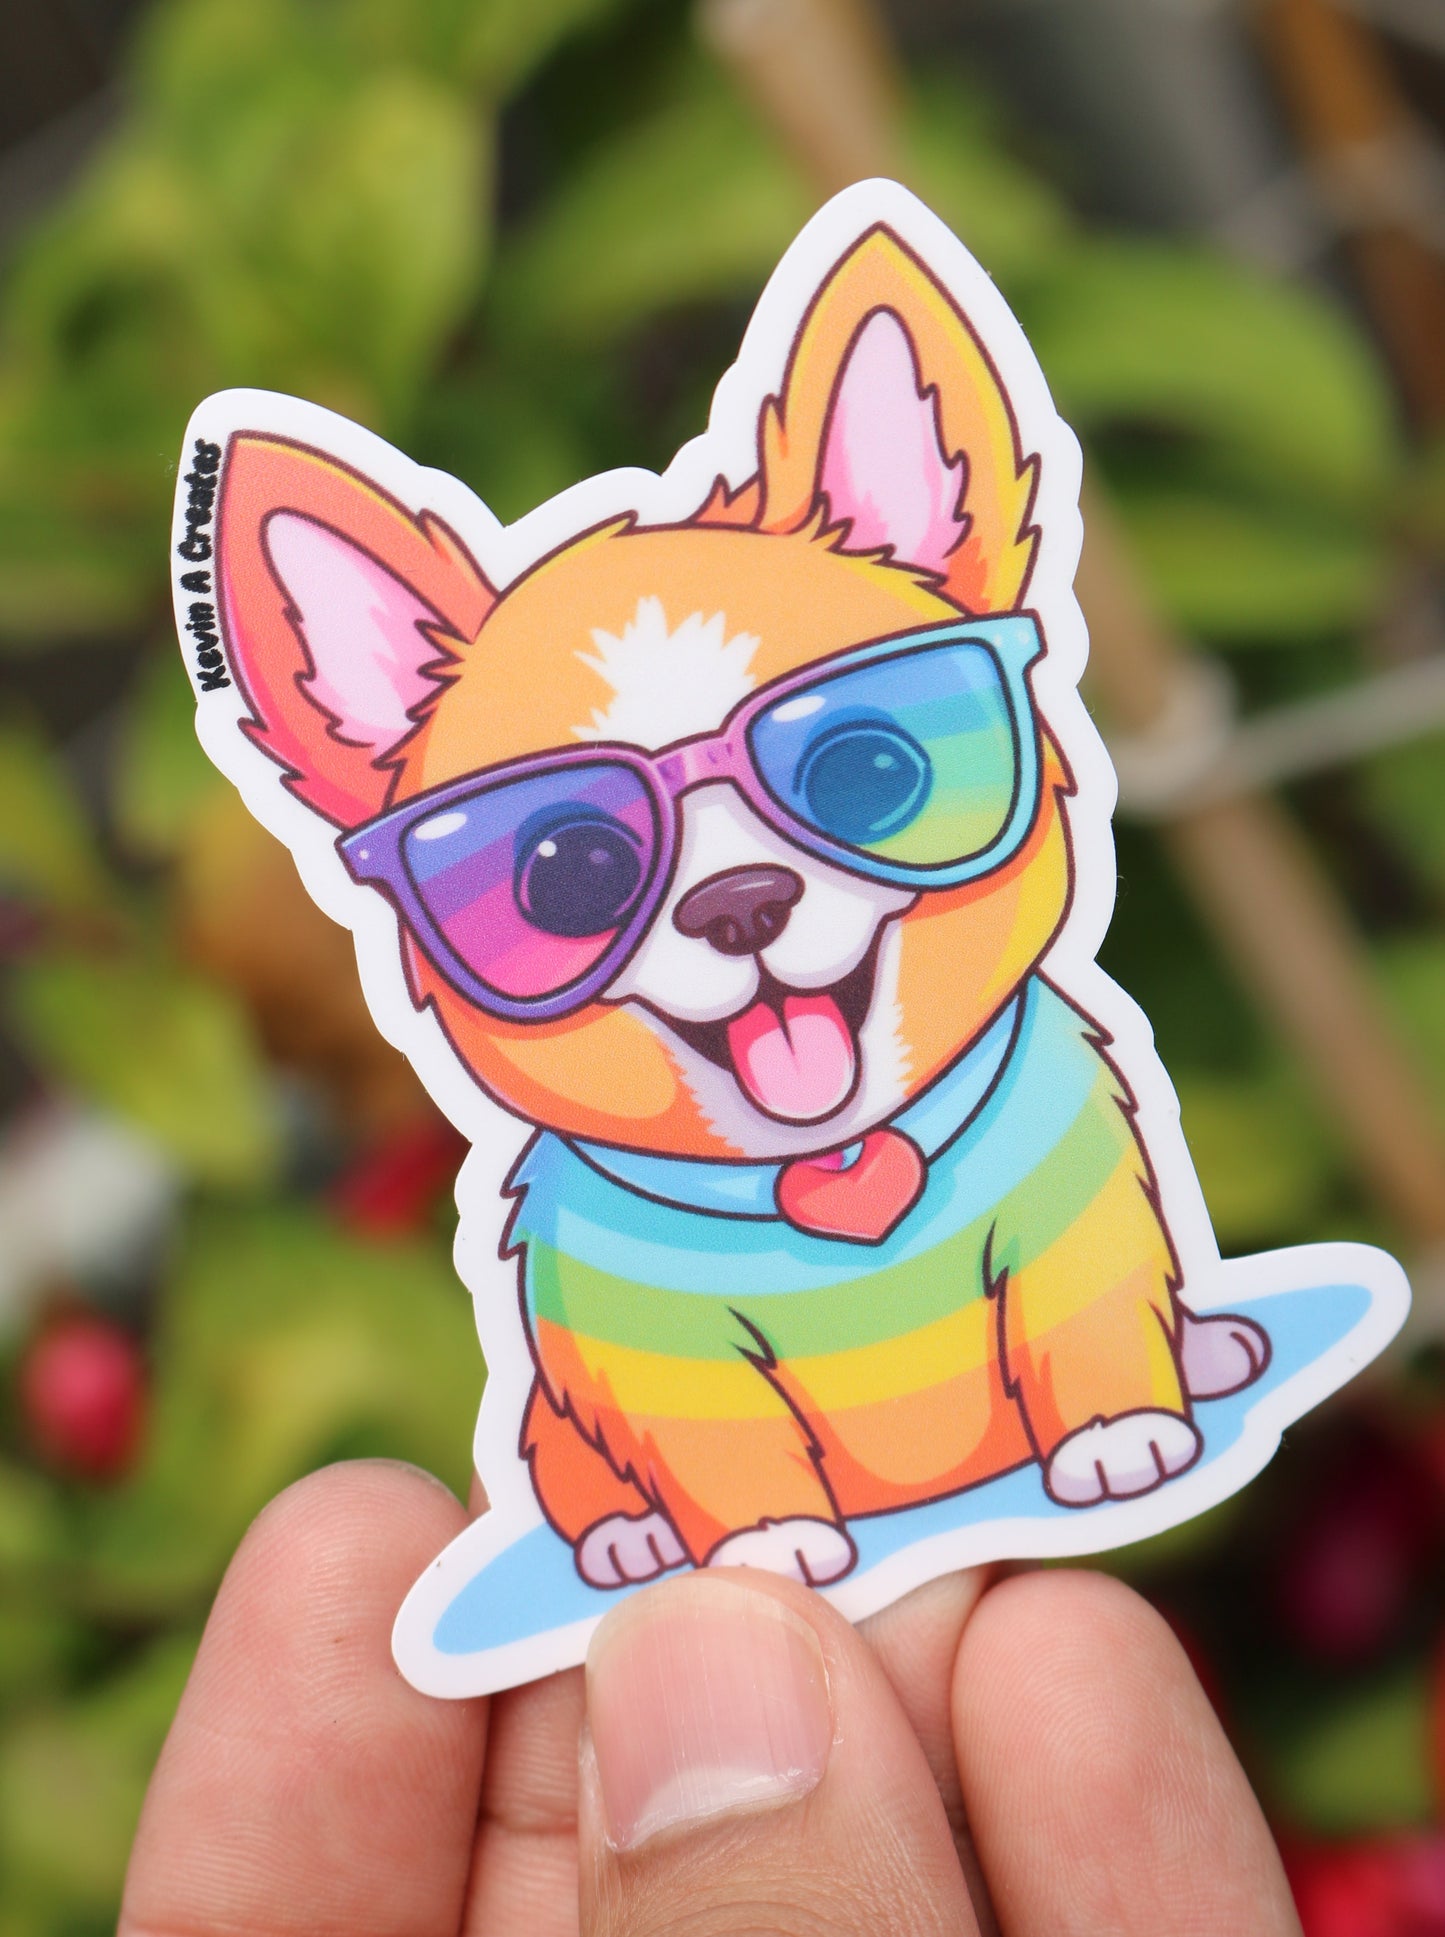 DC-095, Cute Kawaii Rainbow Corgi Doodle Pride Die Cut Stickers